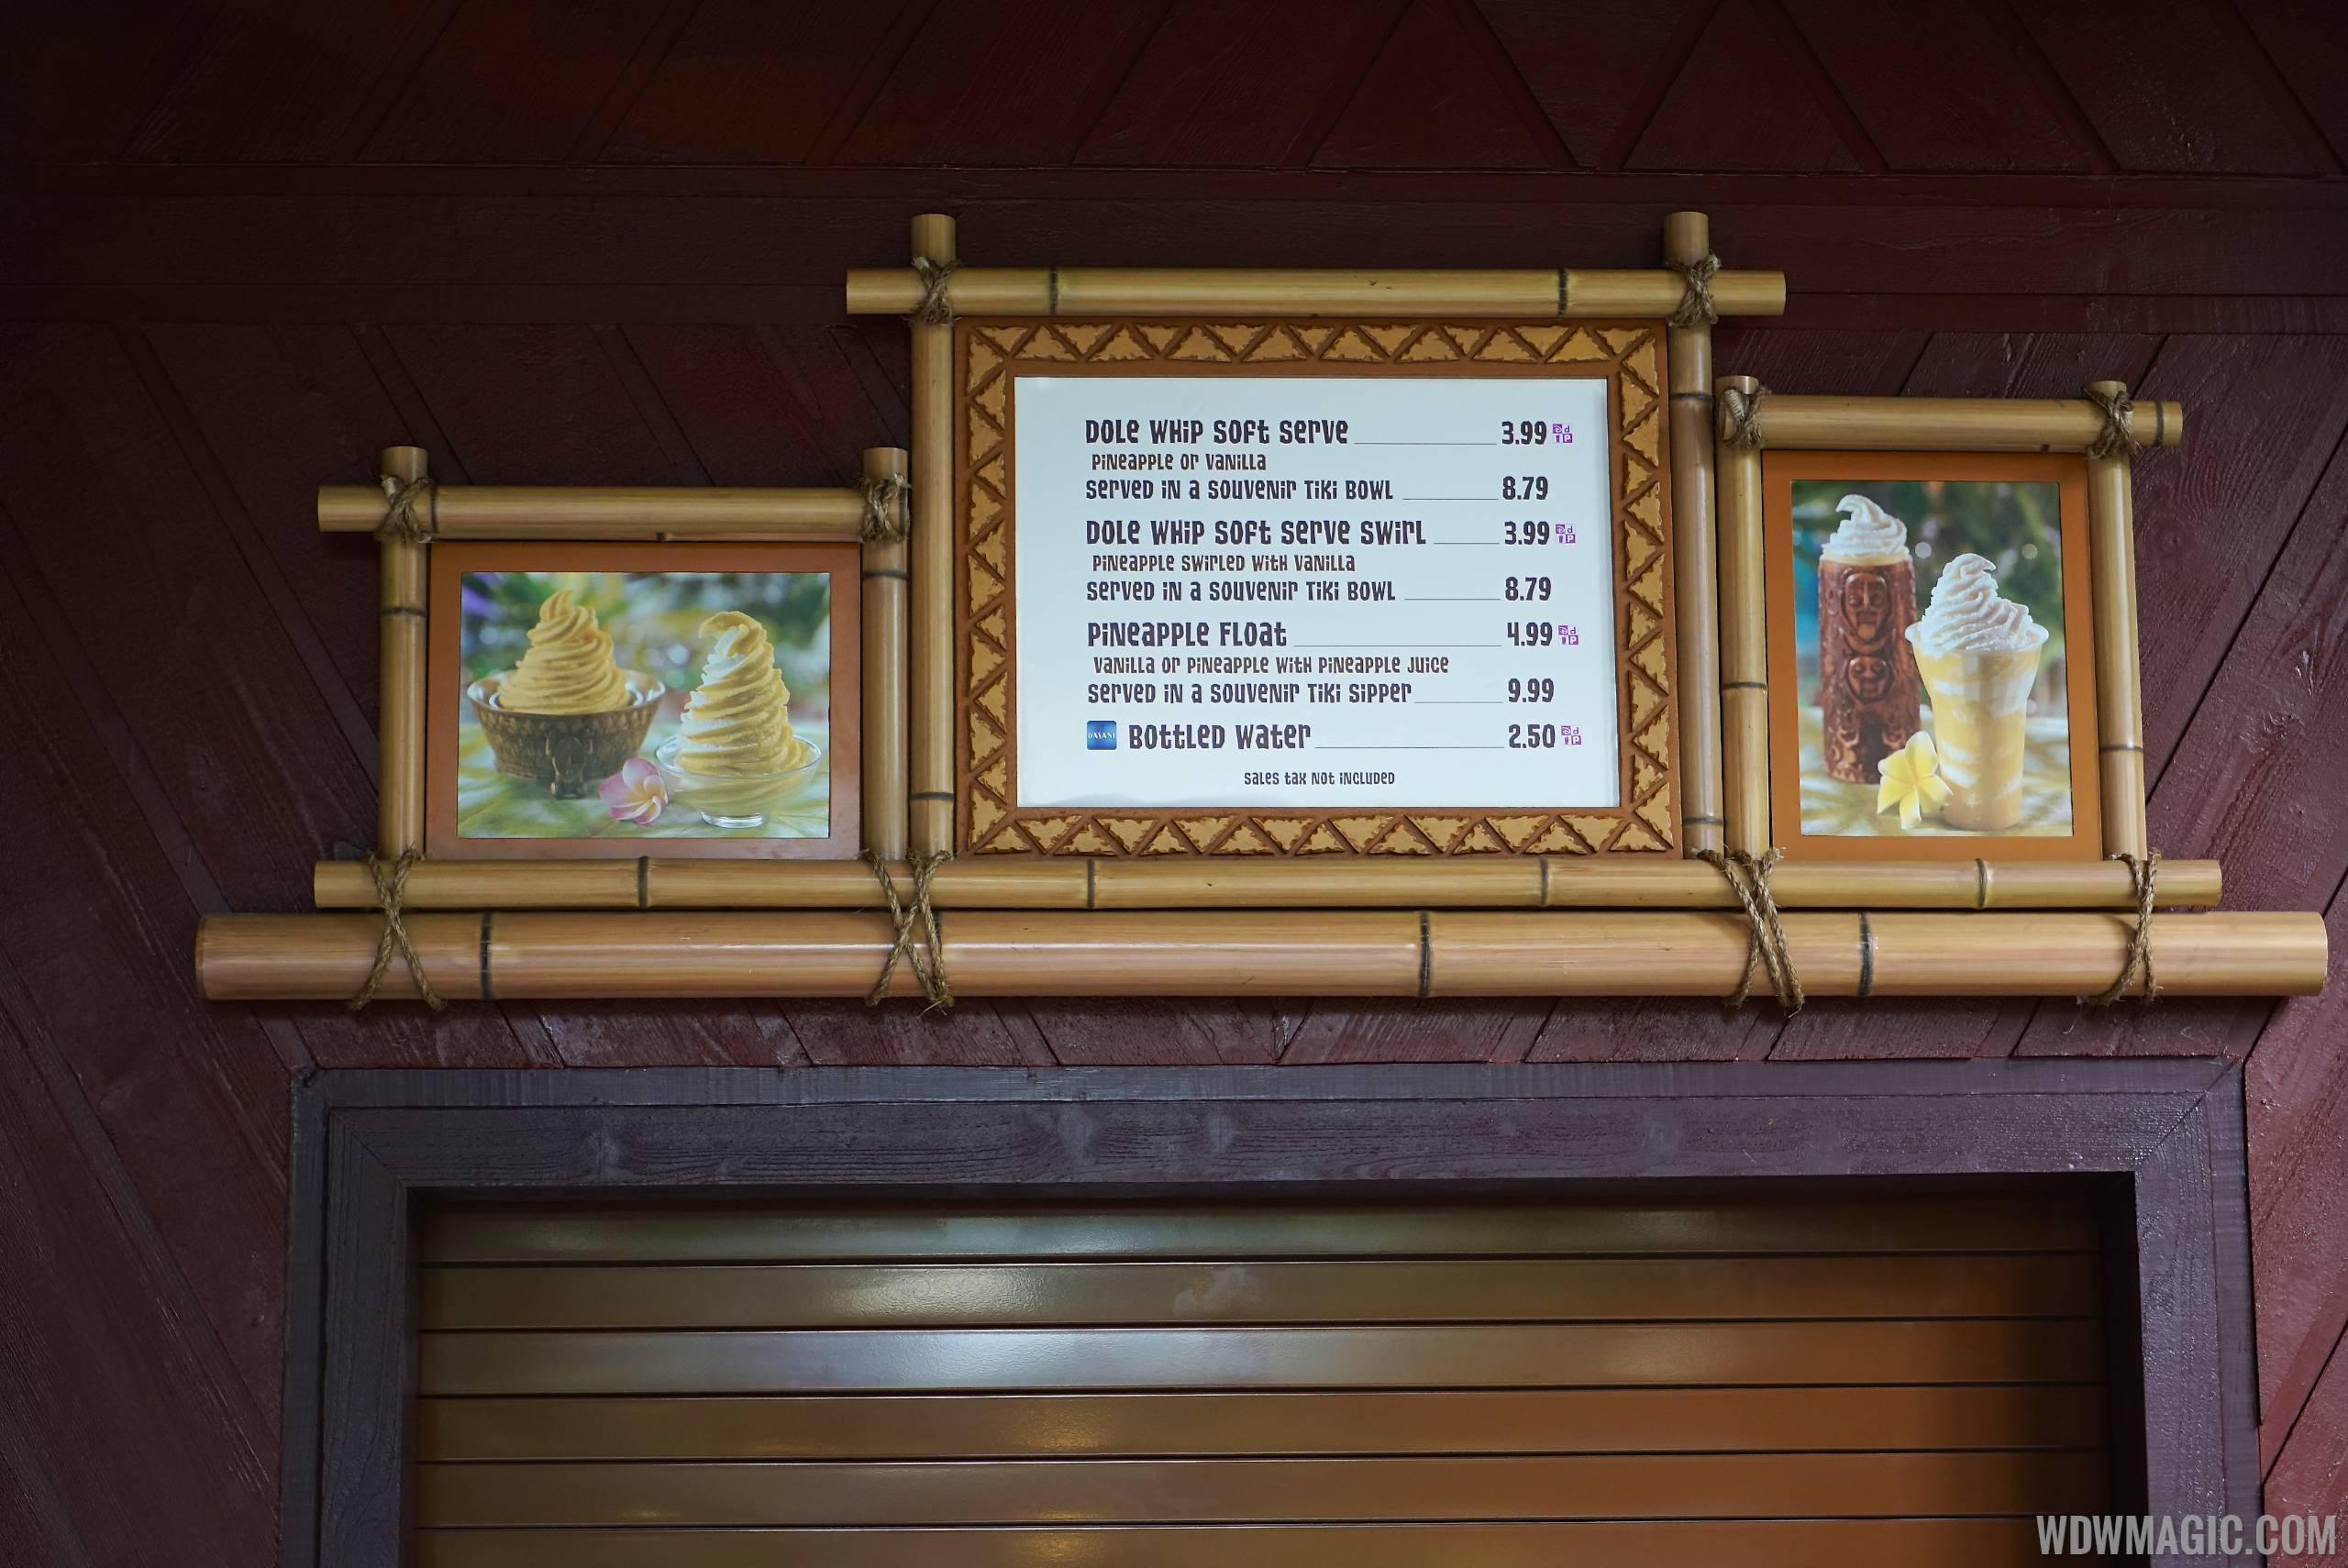 PHOTOS - A look at the new Pineapple Lanai Dole Whip kiosk at Disney's Polynesian Village Resort